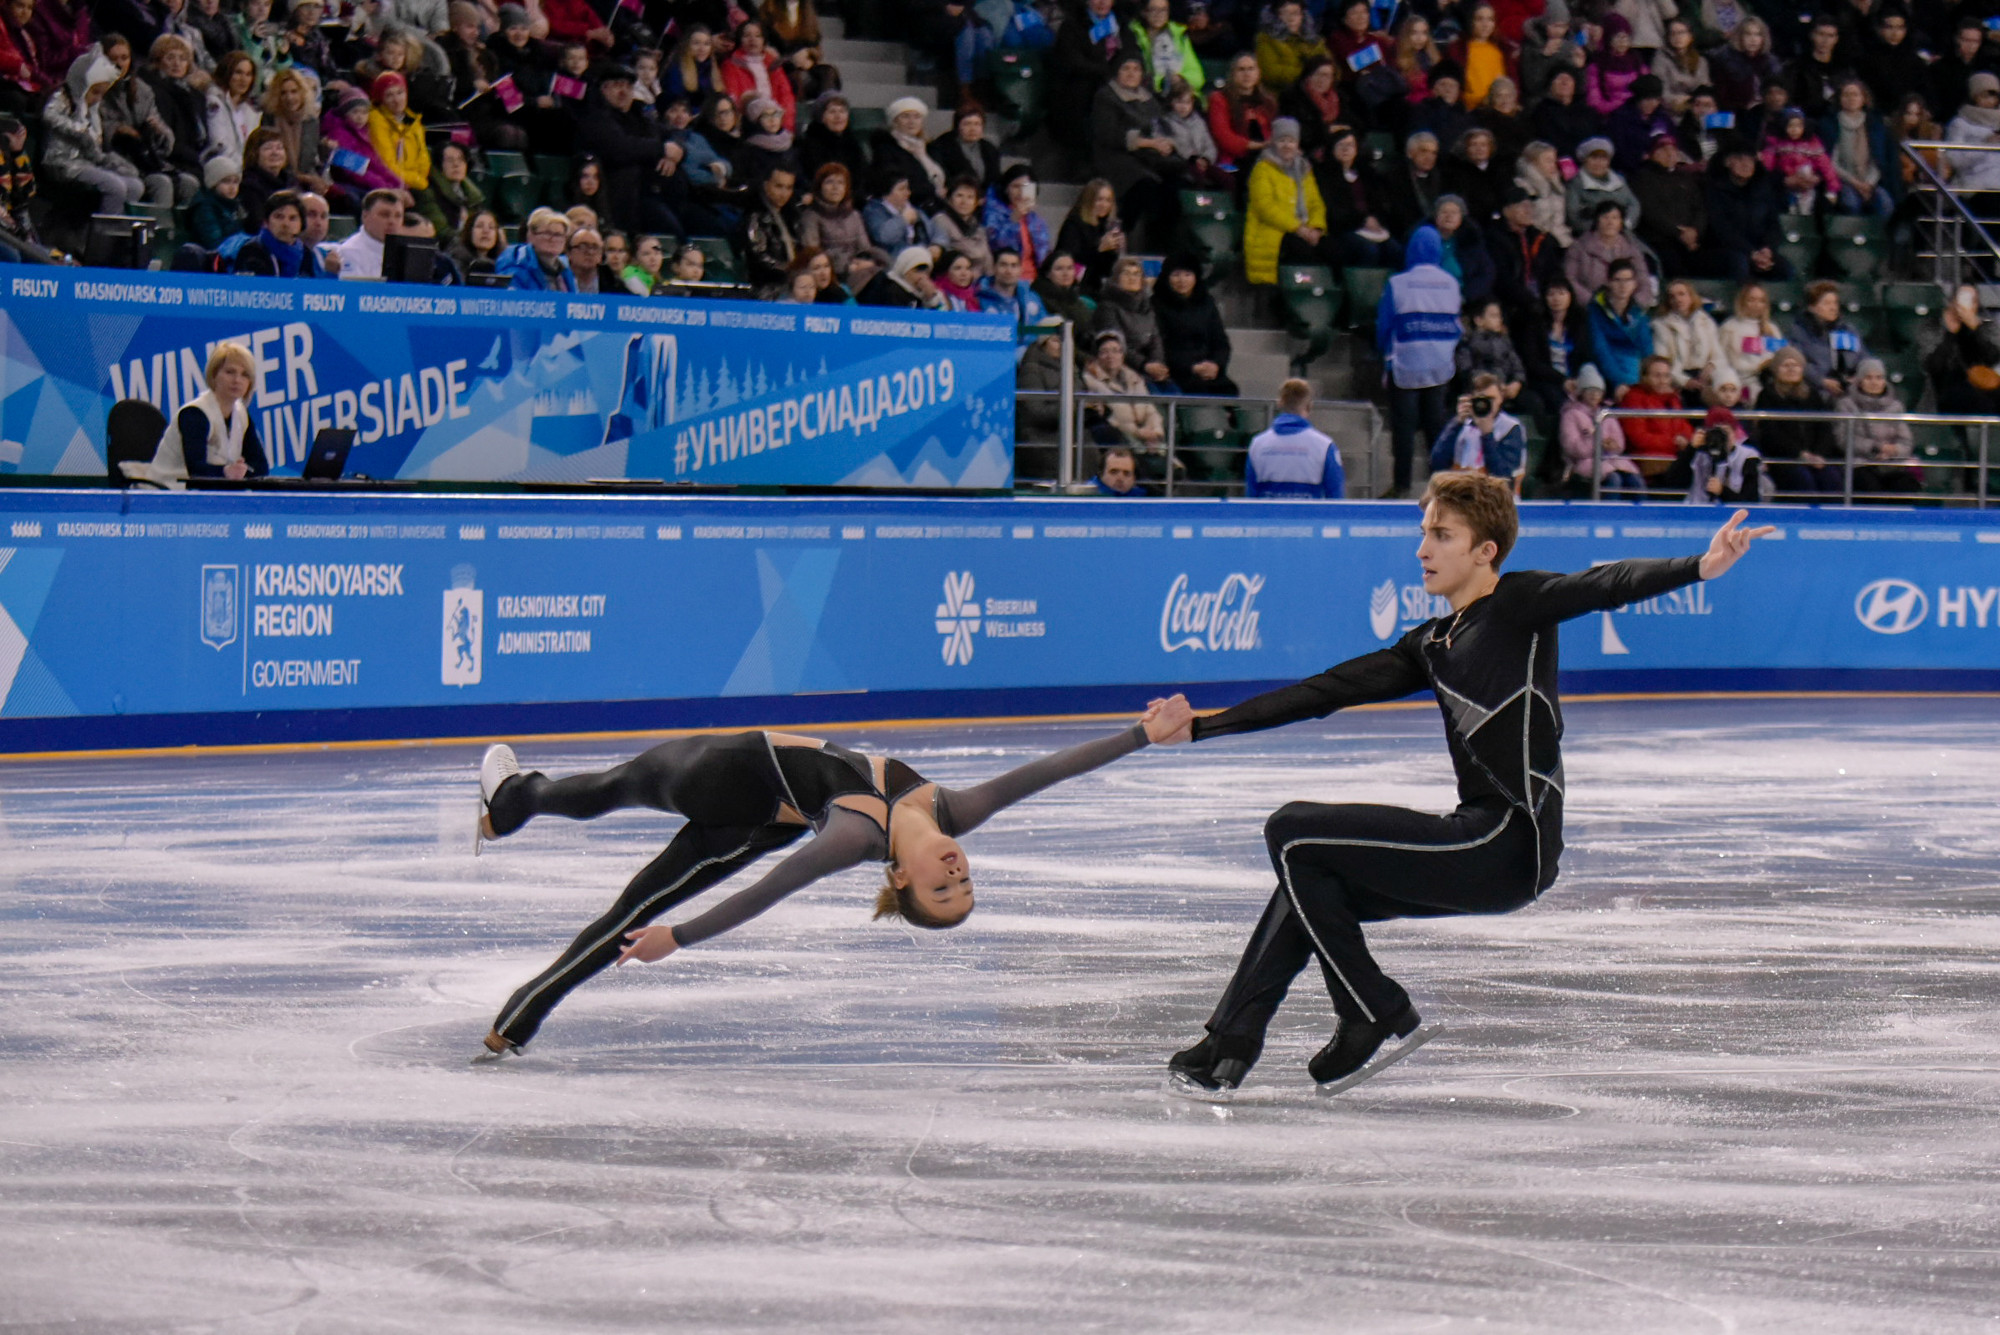 Figure skating competition begins at Krasnoyarsk 2019 Winter Universiade 